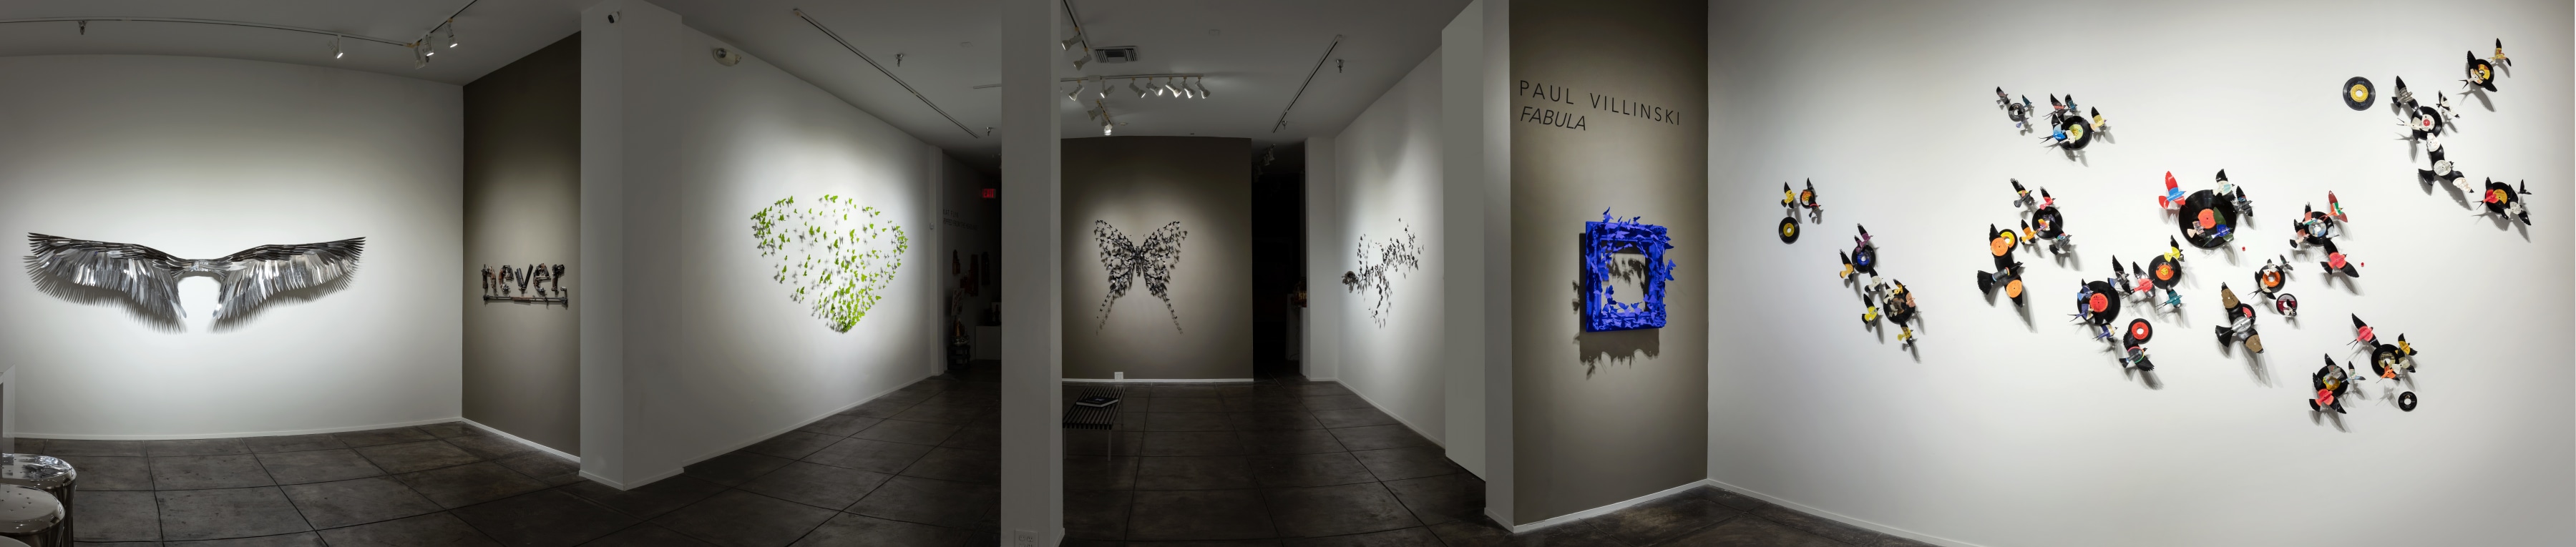 PAUL VILLINSKI - Fabula - Exhibitions - JONATHAN FERRARA GALLERY